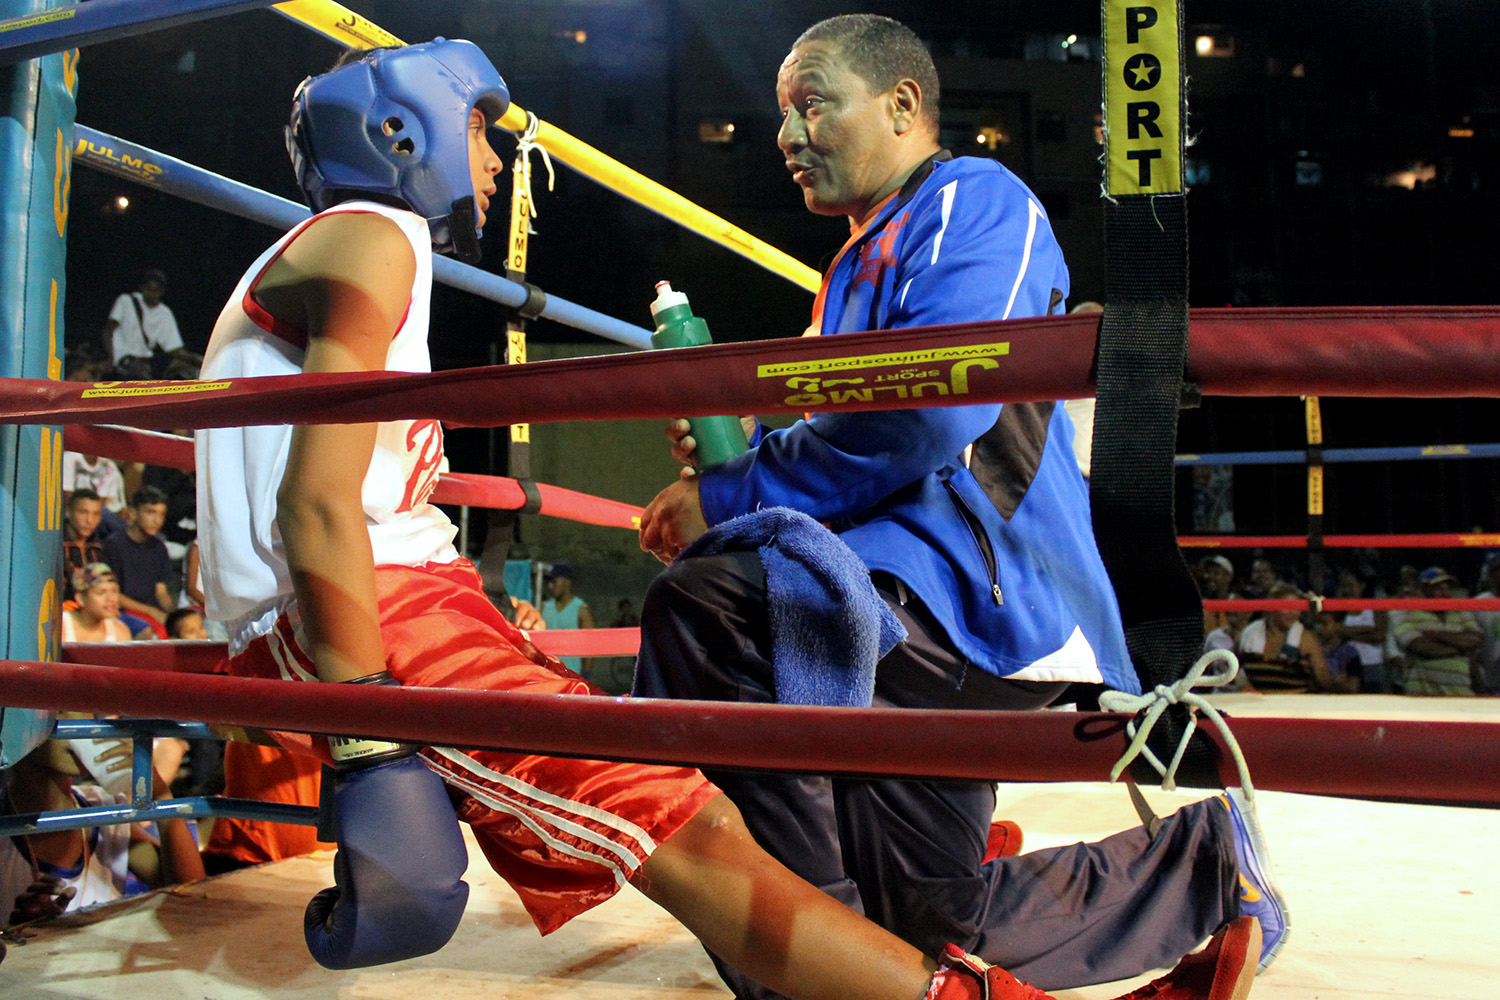 Deportes Sucre realizó “Boxeo de Calle” en Petare